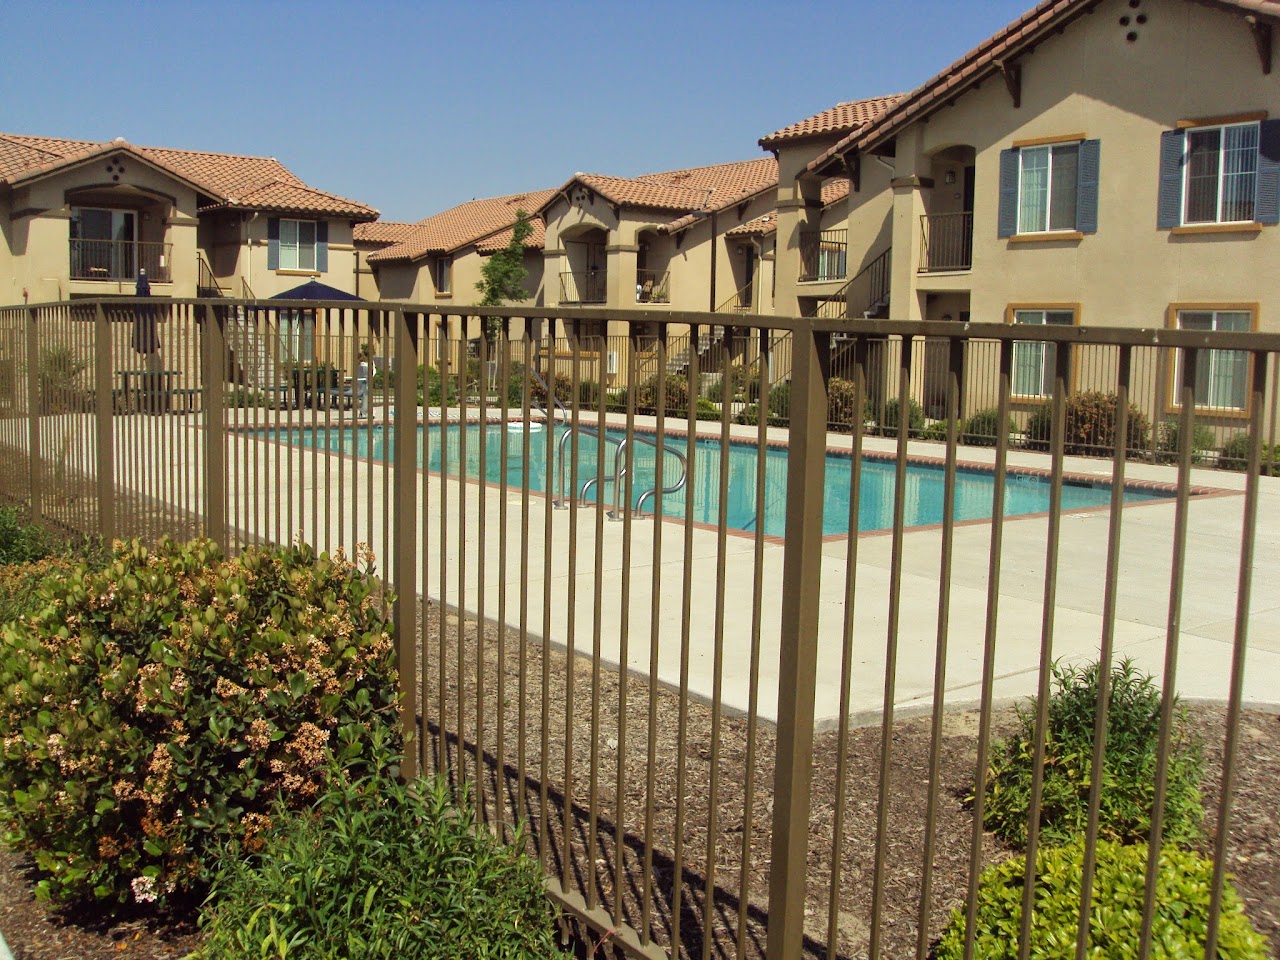 Photo of CORDOVA APTS. Affordable housing located at 2320 STILLMAN ST SELMA, CA 93662